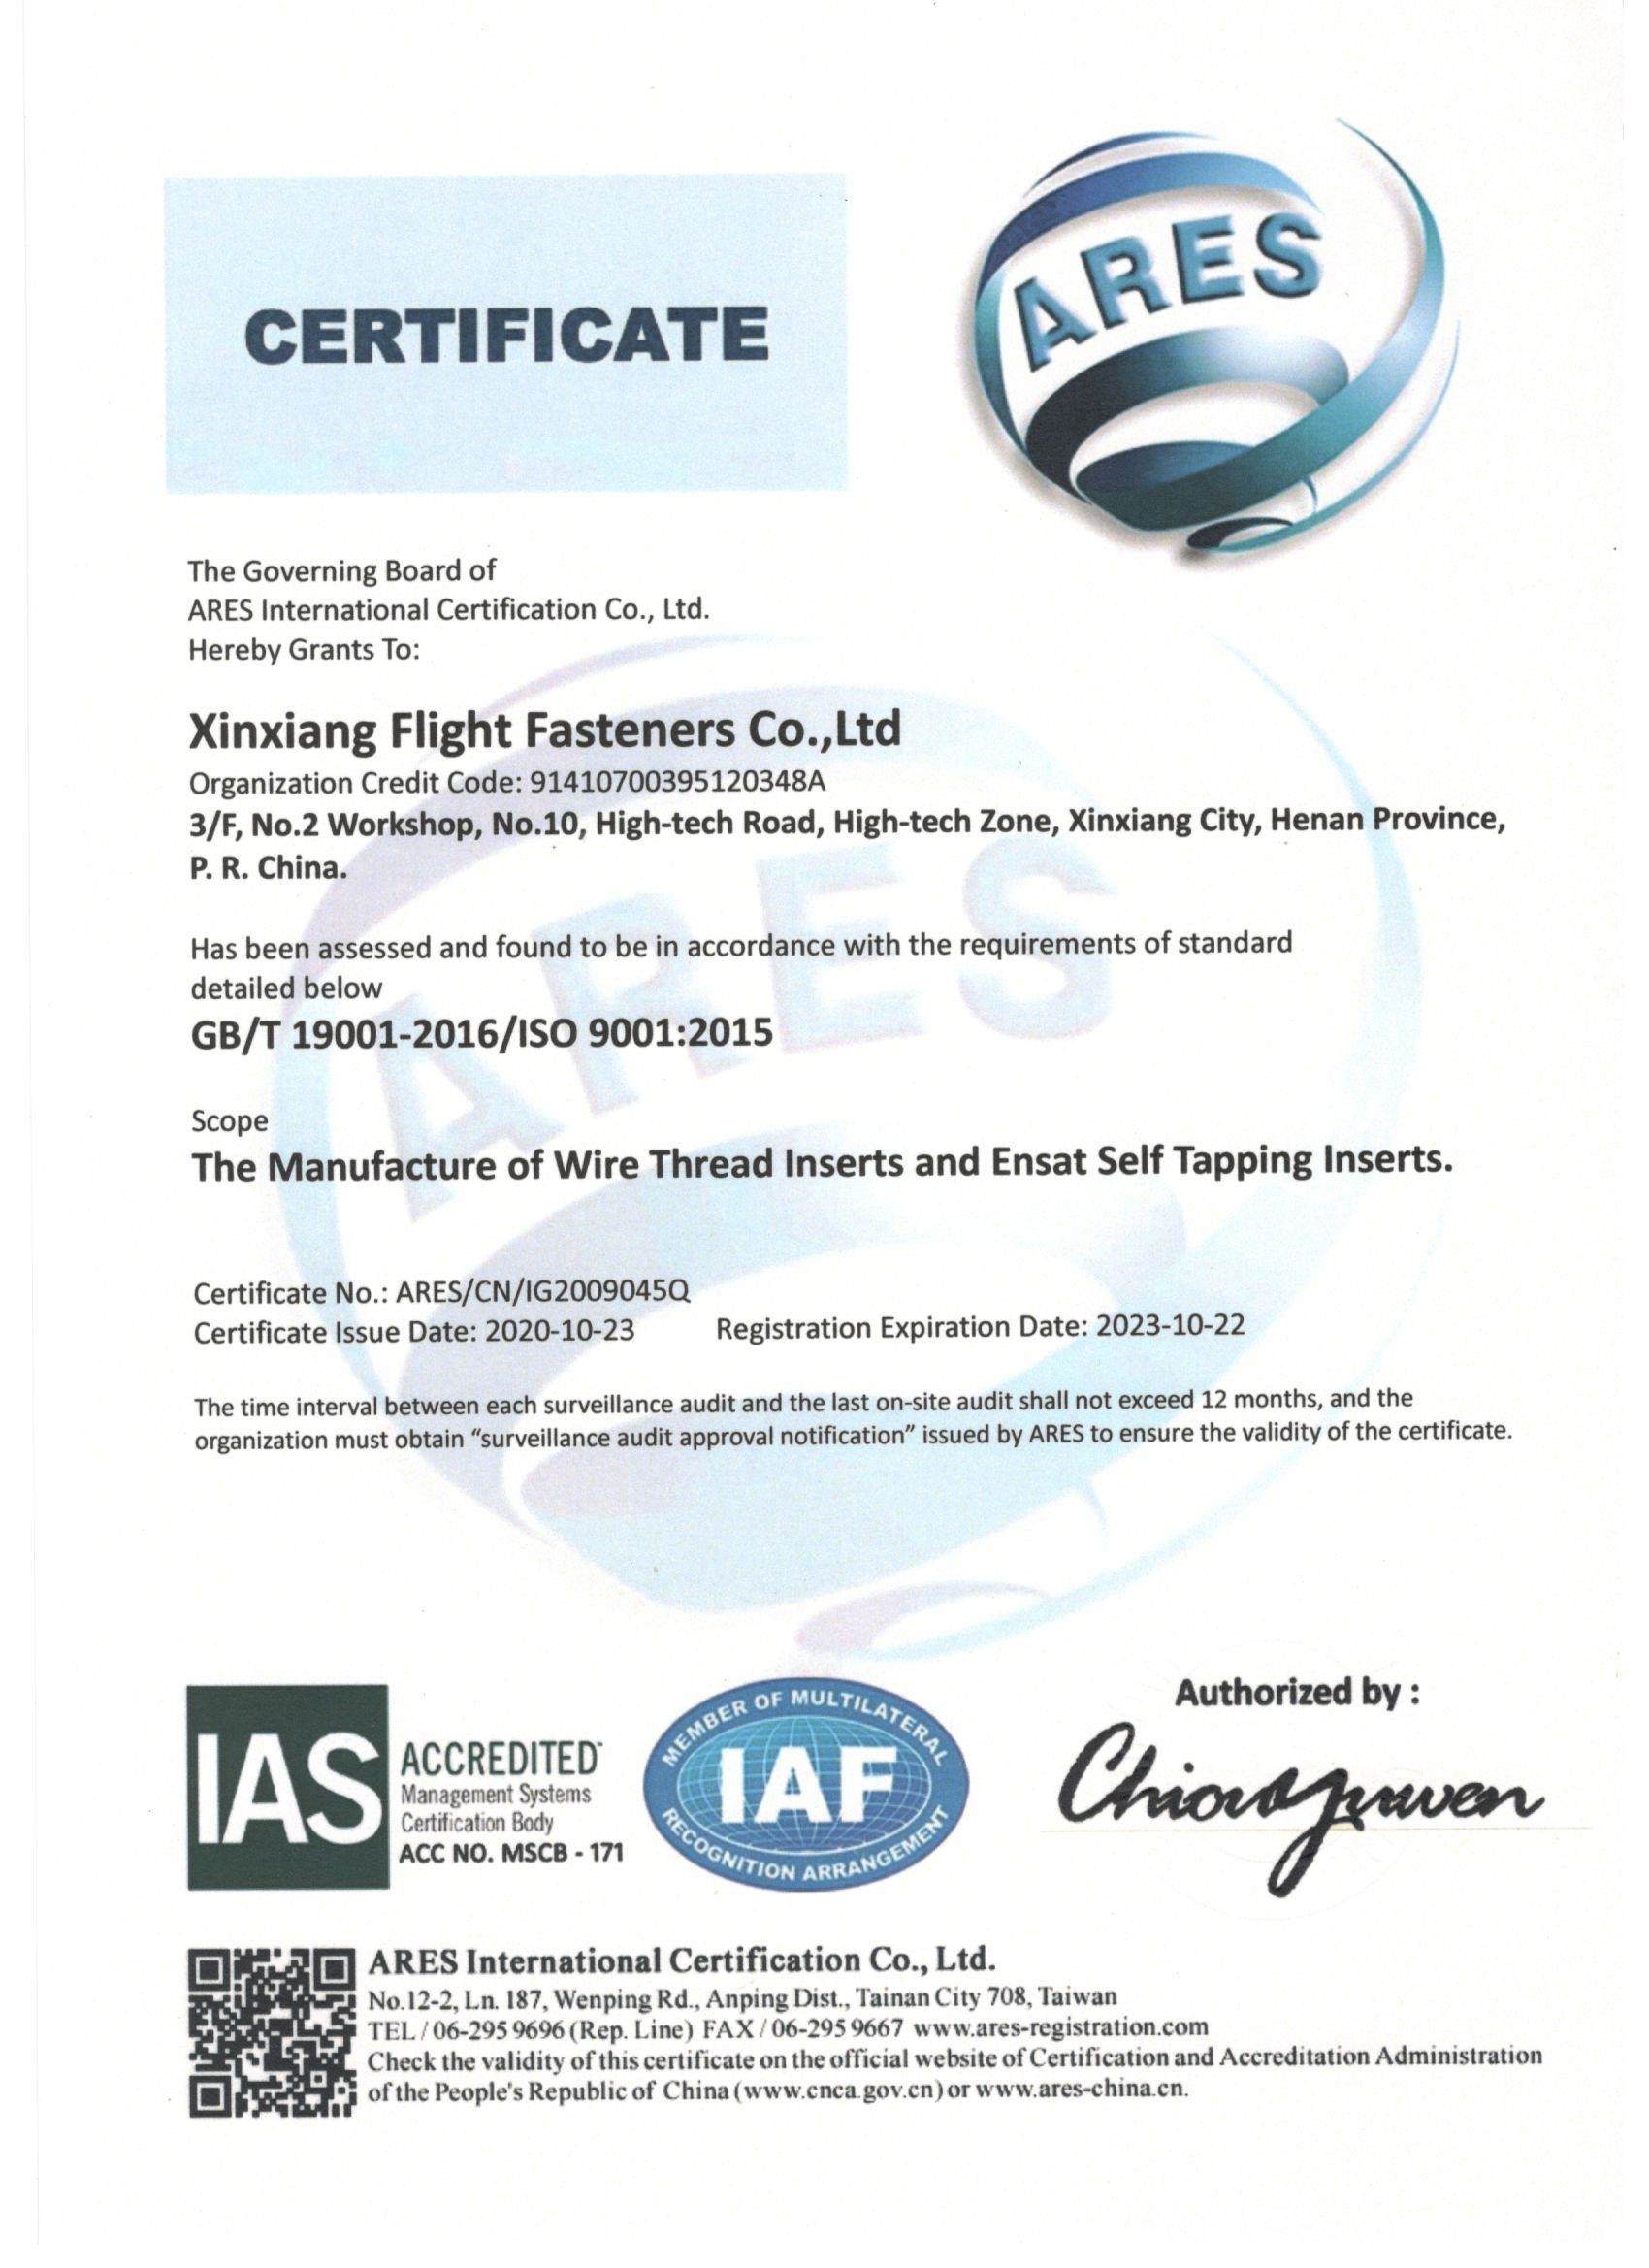 Xinxiang Flight Fasteners Co., Ltd. Certifications